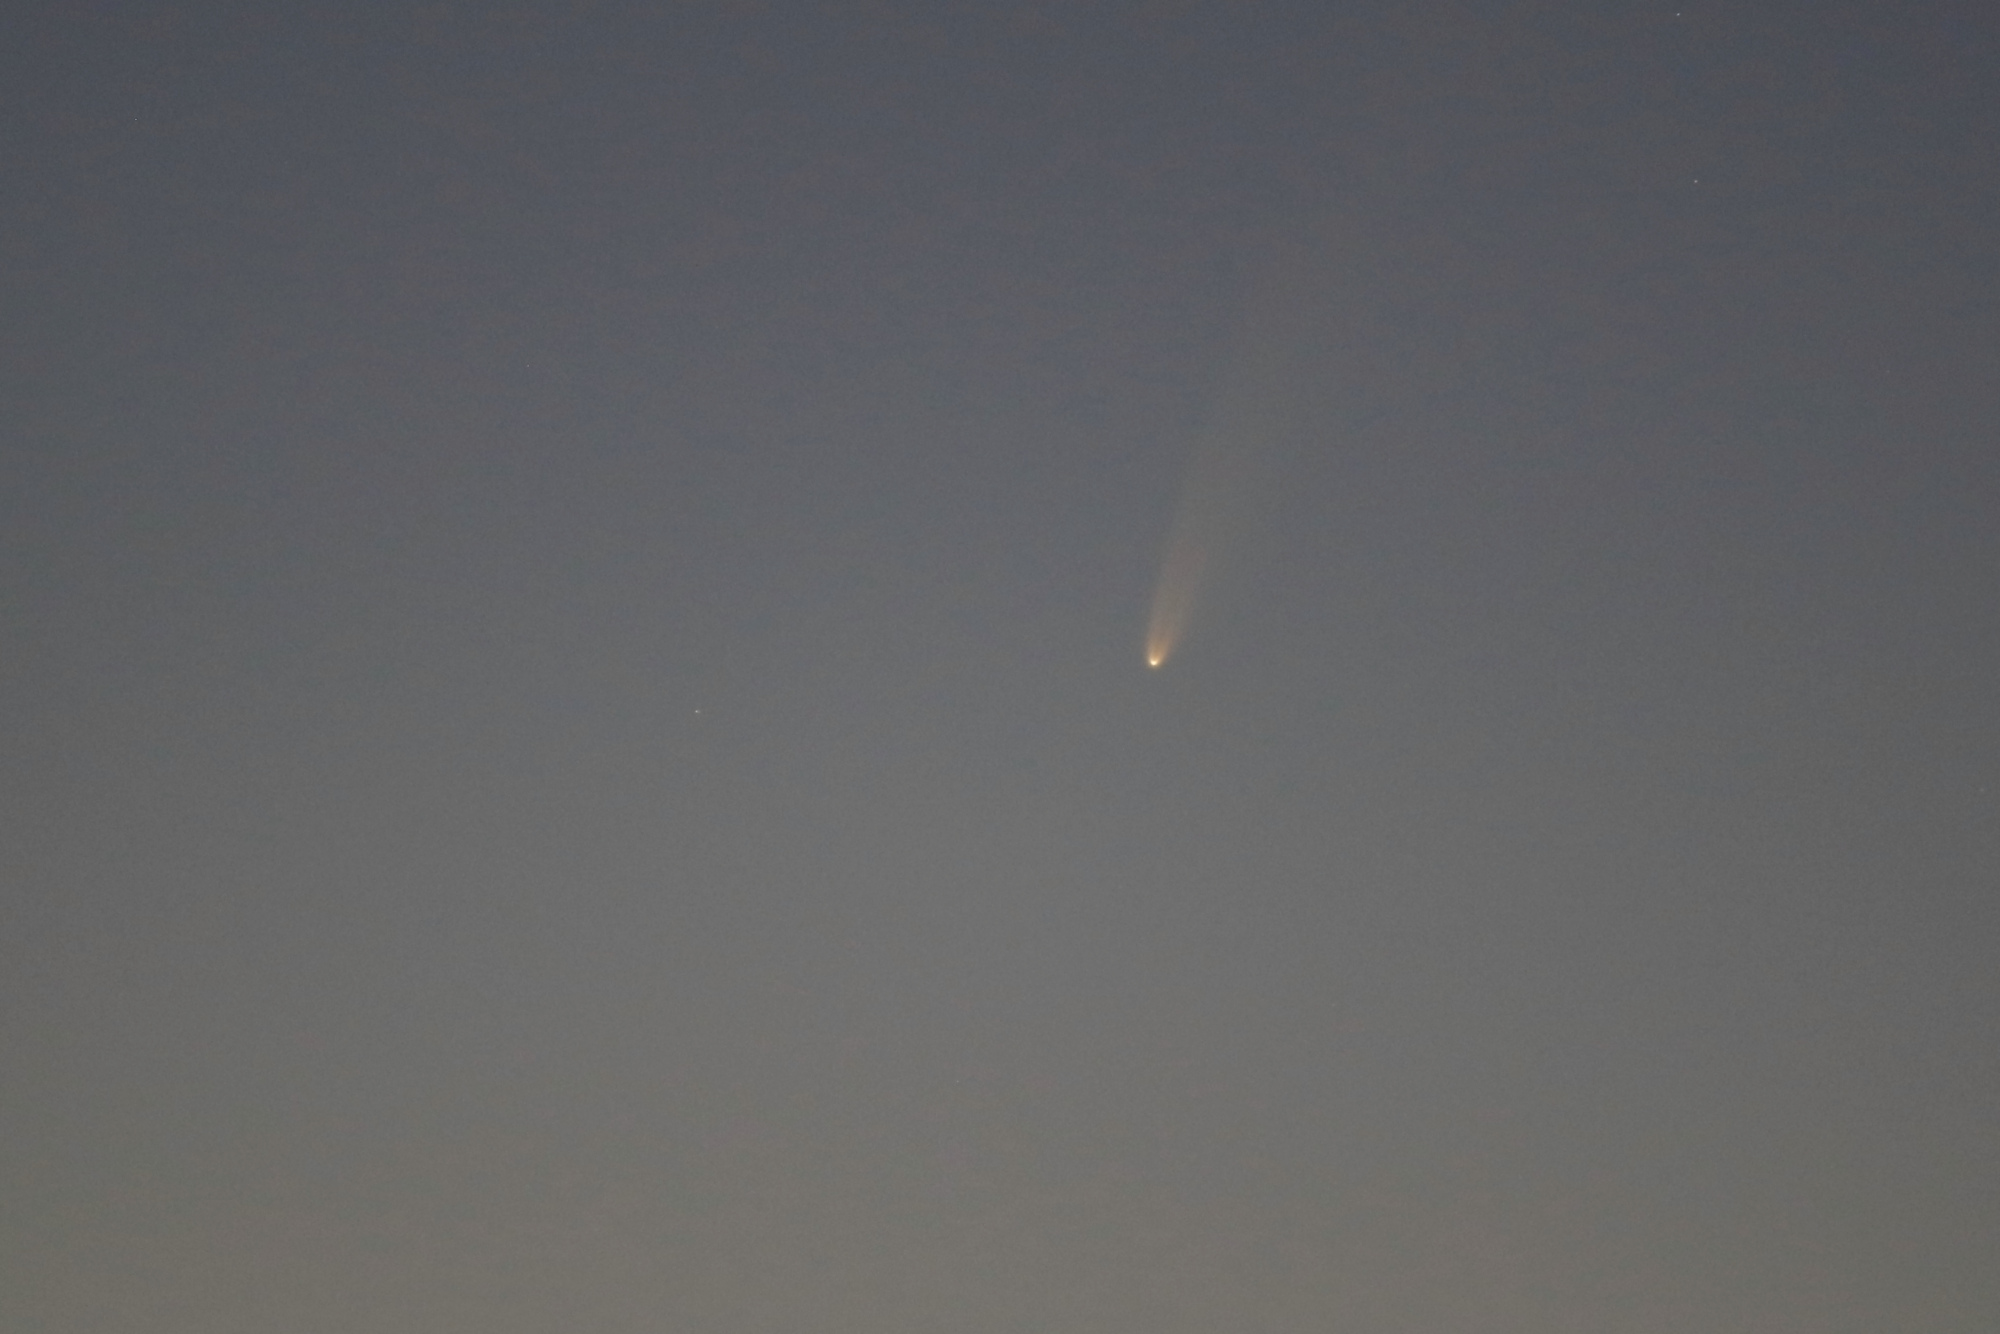 Comet1.thumb.JPG.9c55ba83b0577639d4ff550243a22242.JPG